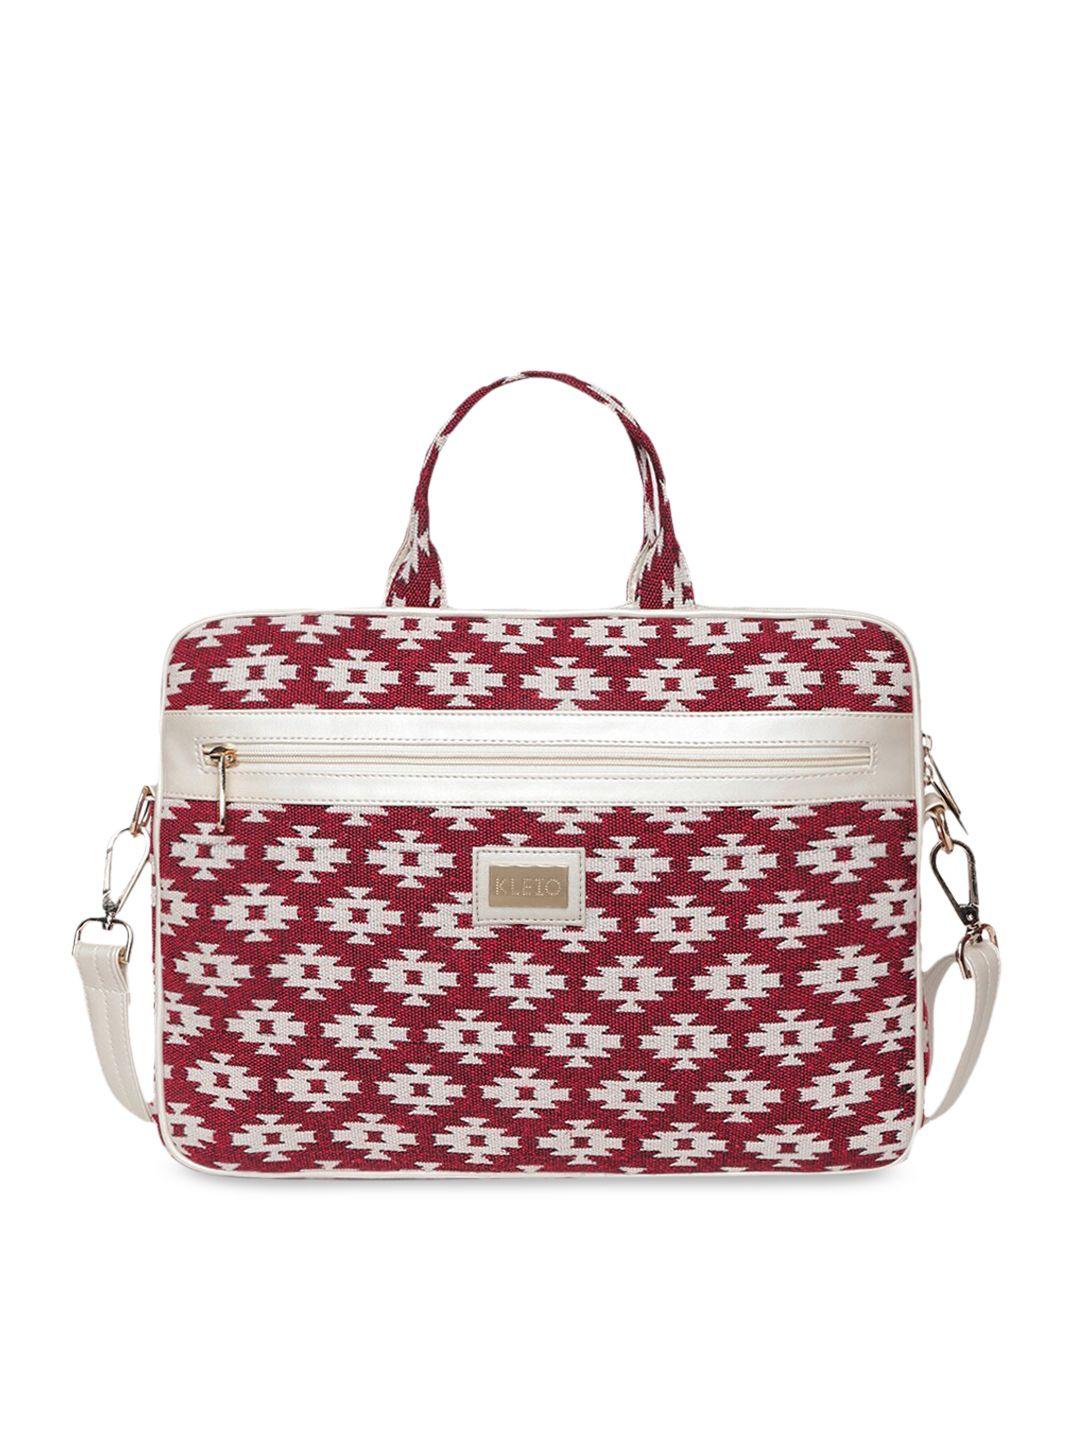 kleio unisex red & white printed laptop bag